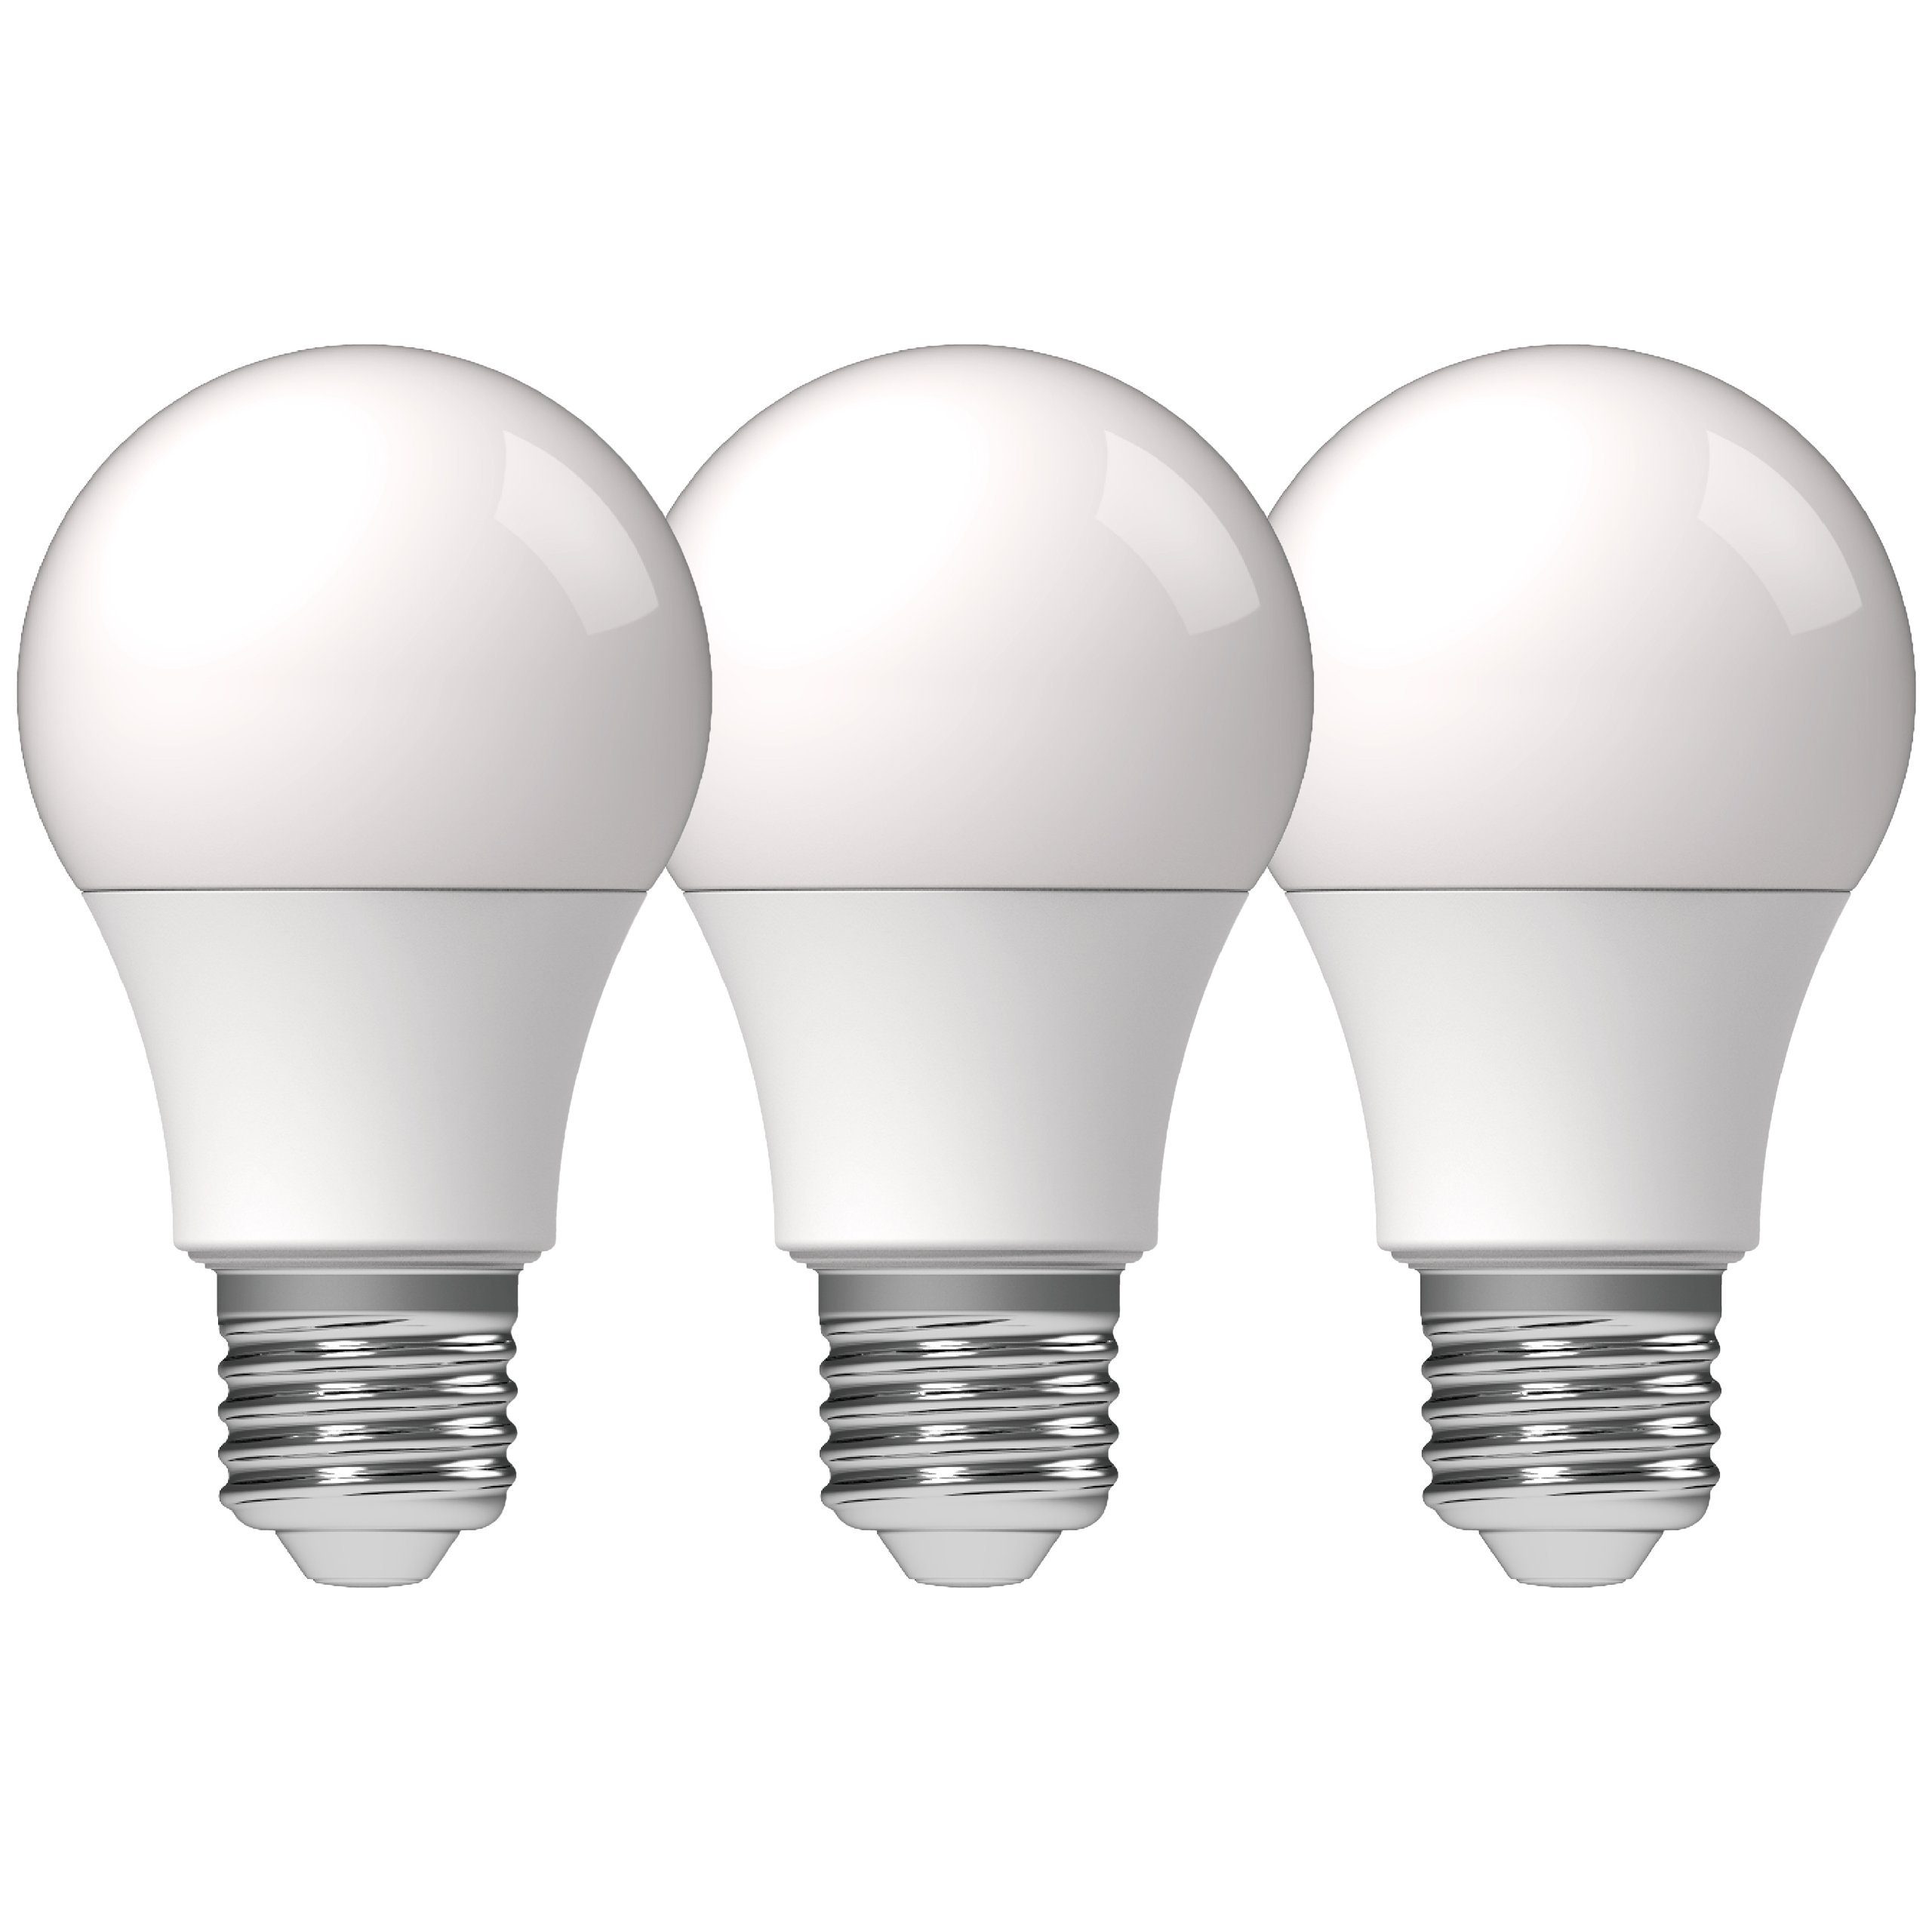 LED's light LED-Leuchtmittel 0620171 LED Glühbirne, E27, E27 8W neutralweiß Opal A60 3-Pack